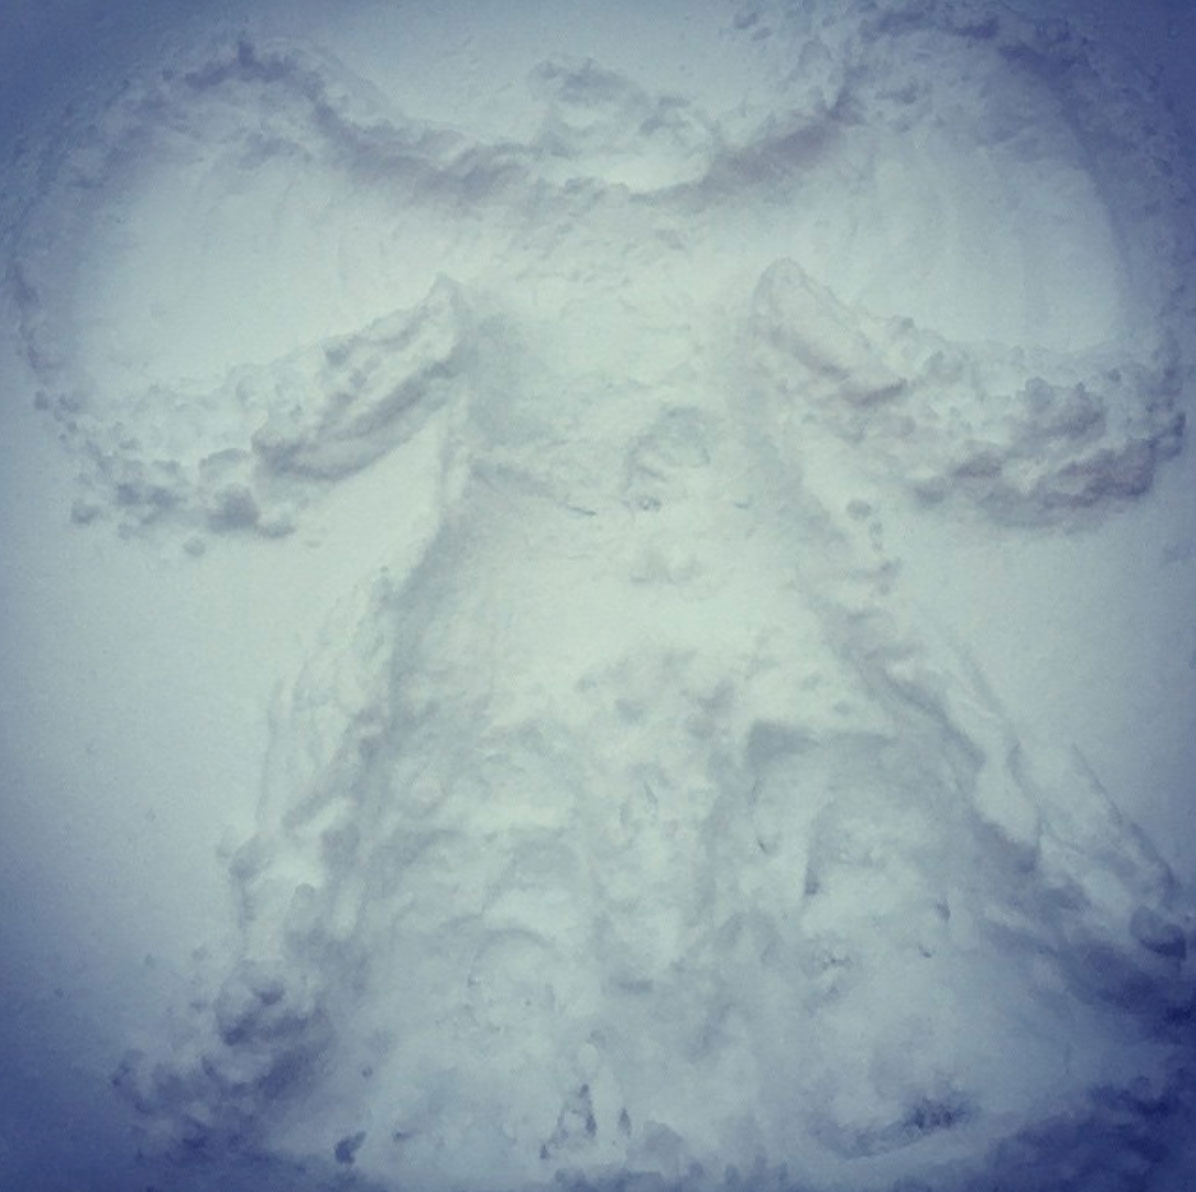 Snow Angel imprints